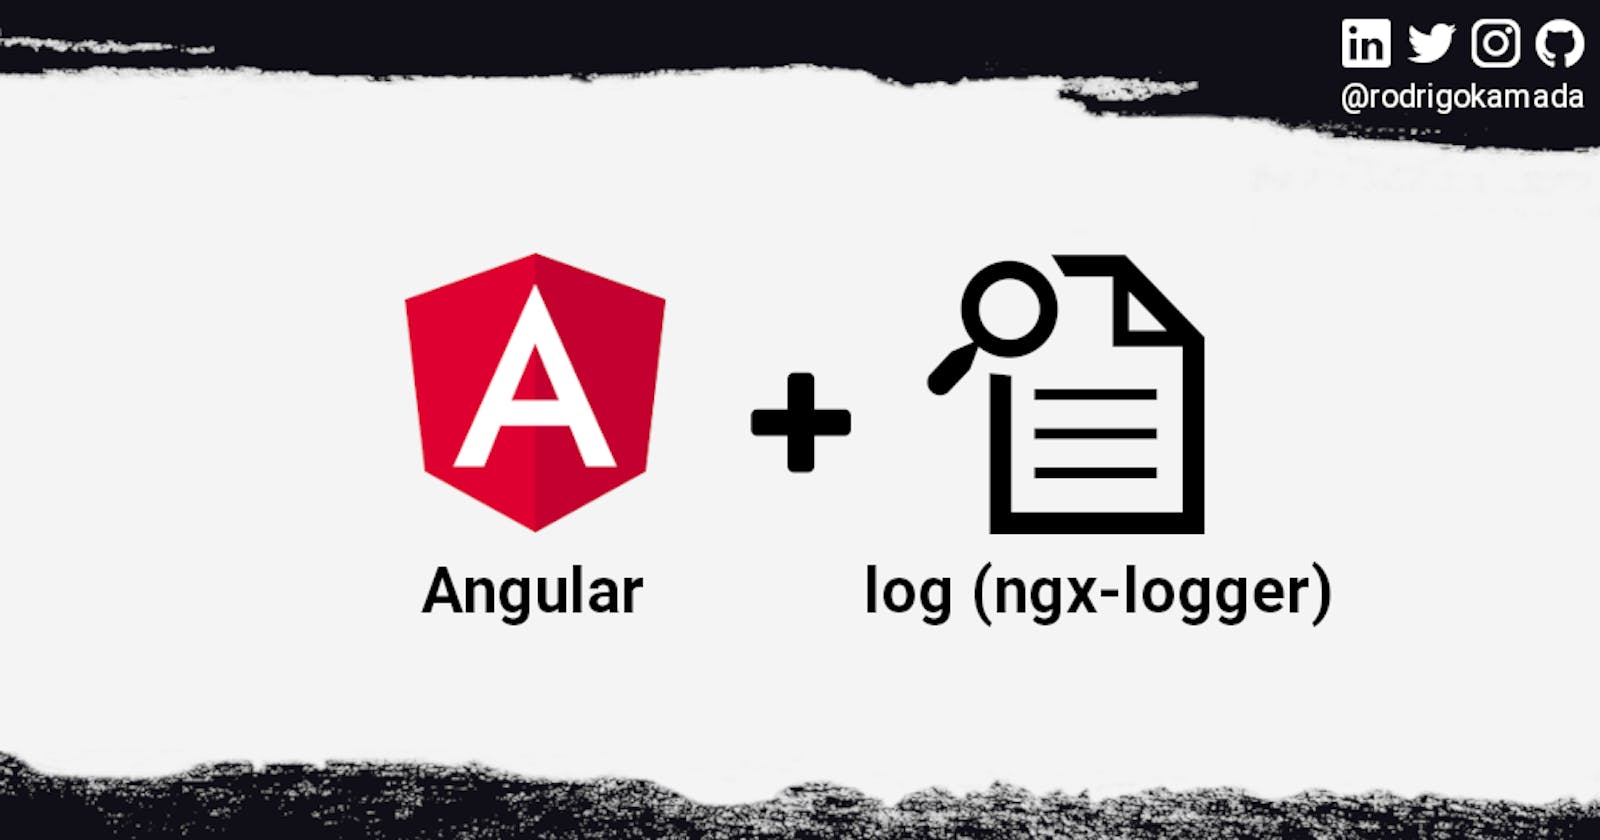 Adding the log component to an Angular application